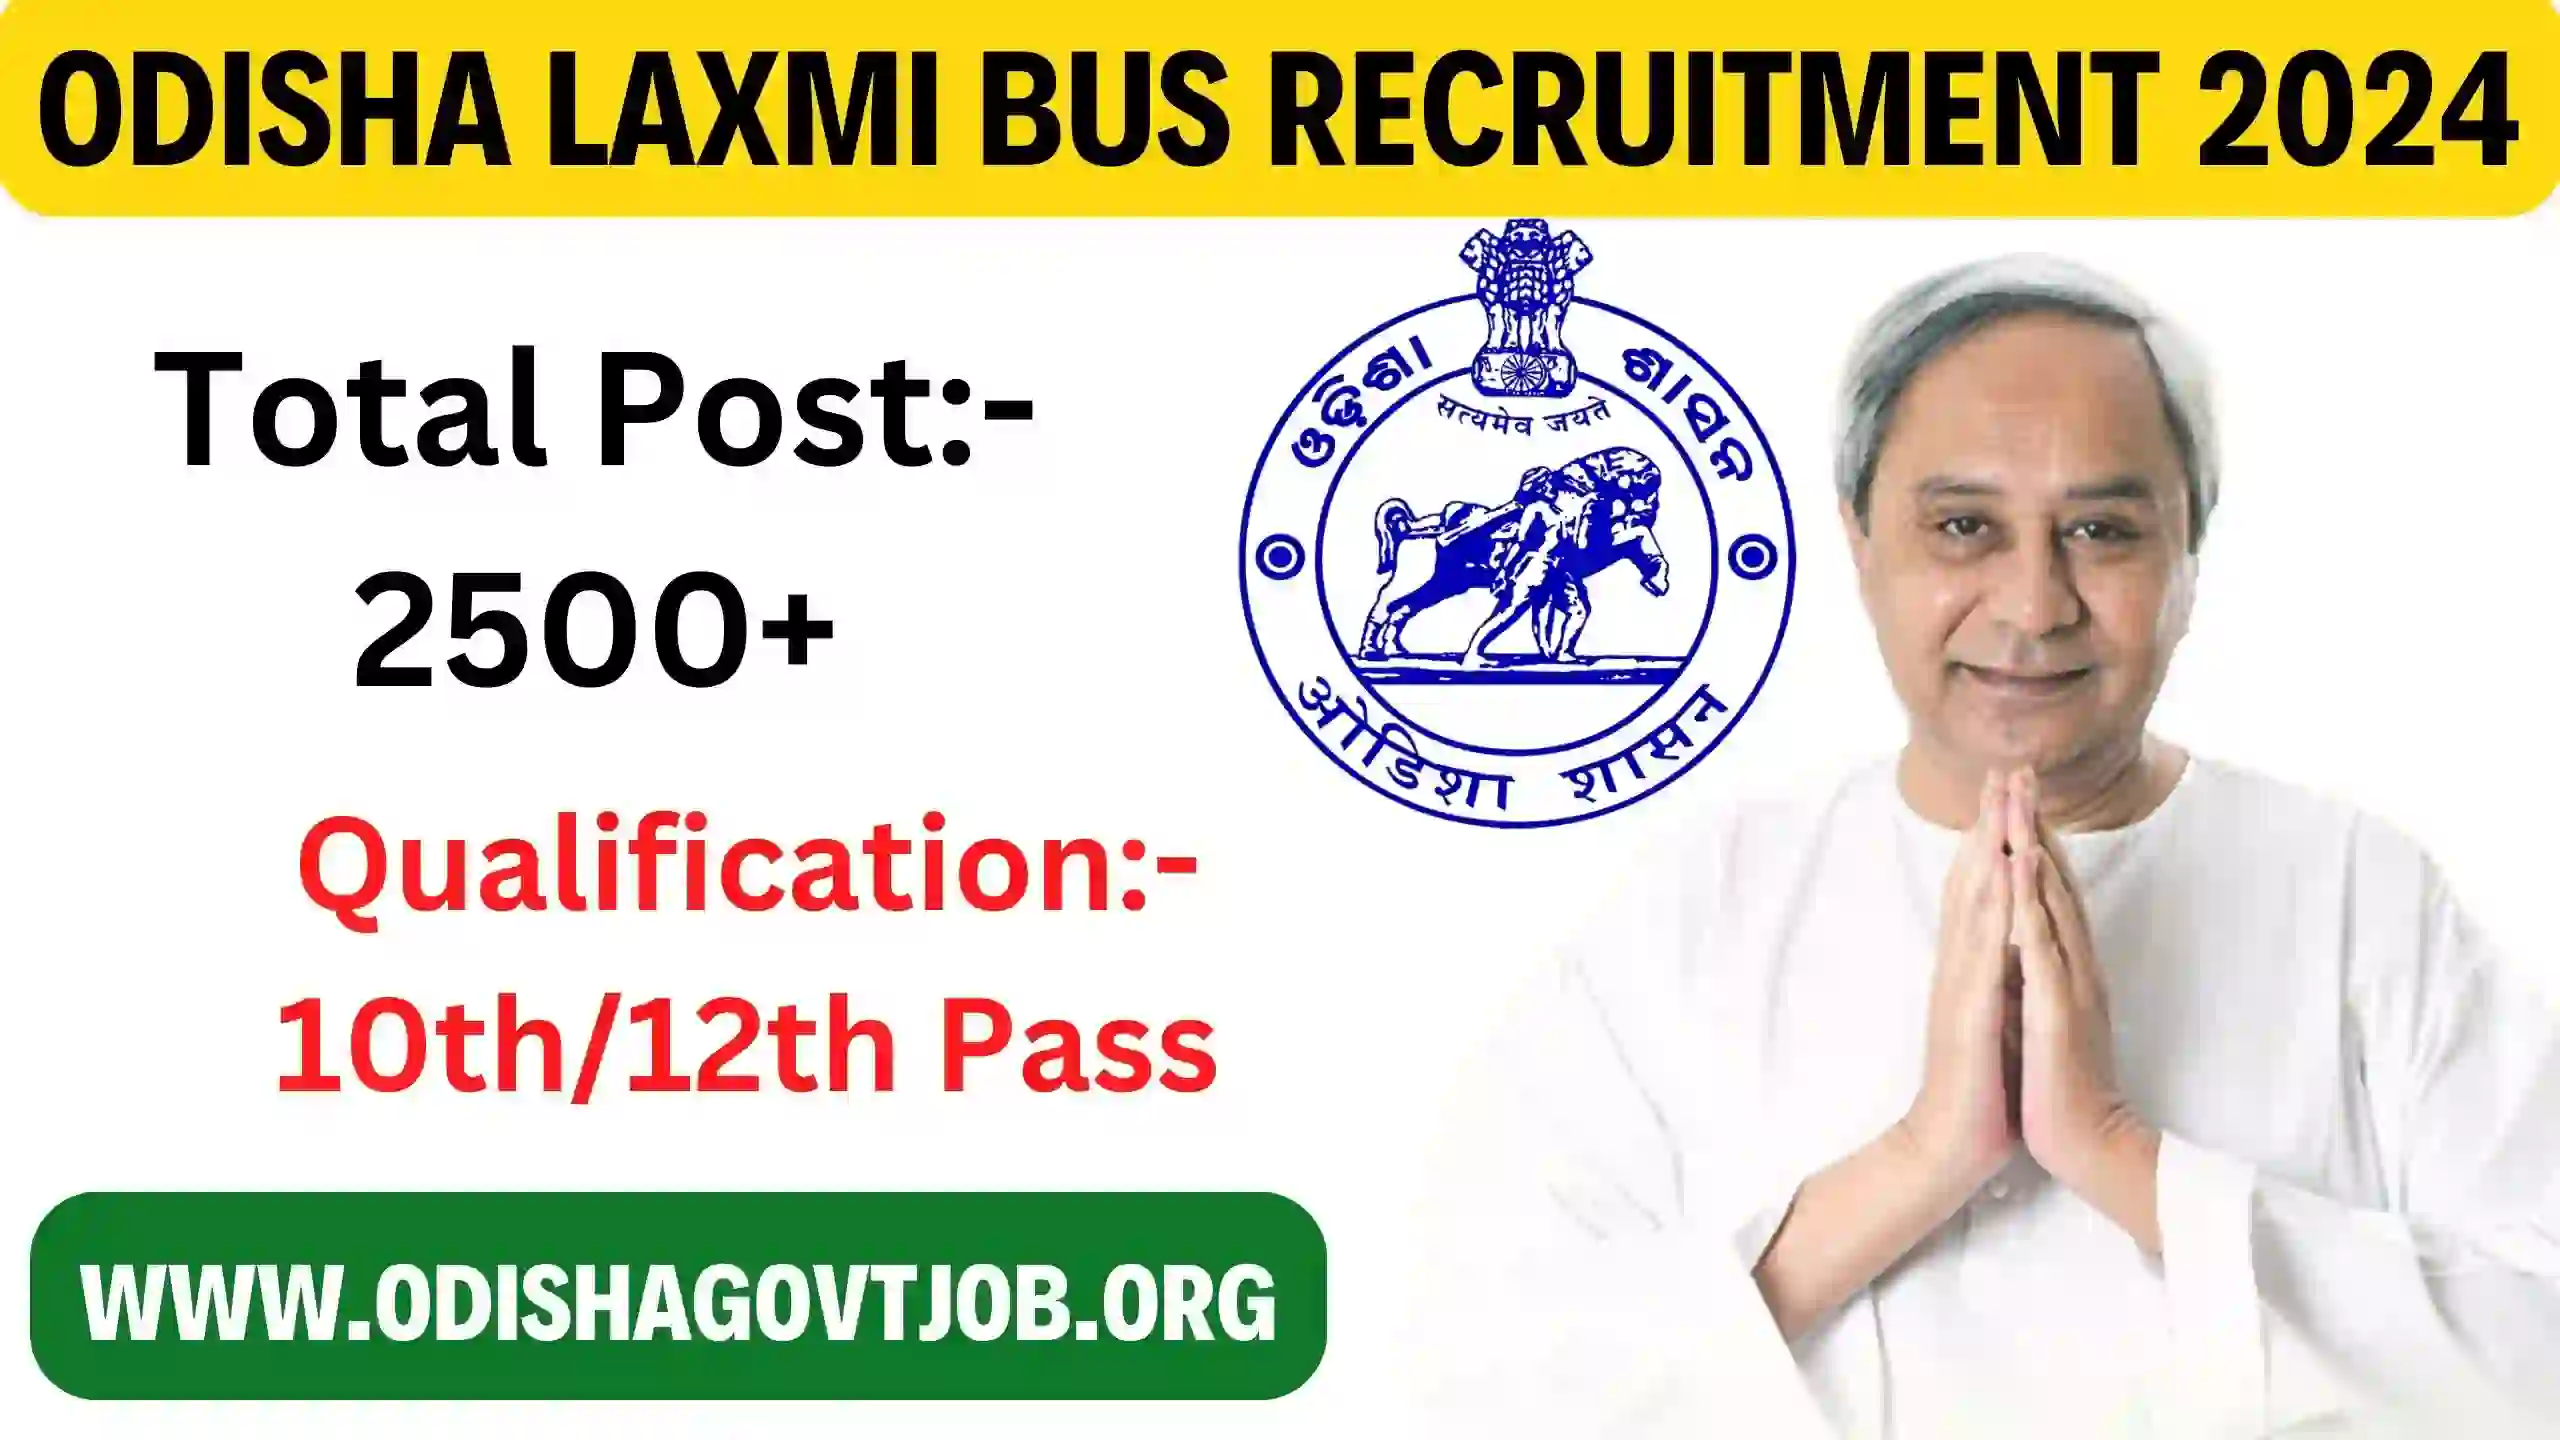 Odisha Laxmi Bus Recruitment 2024